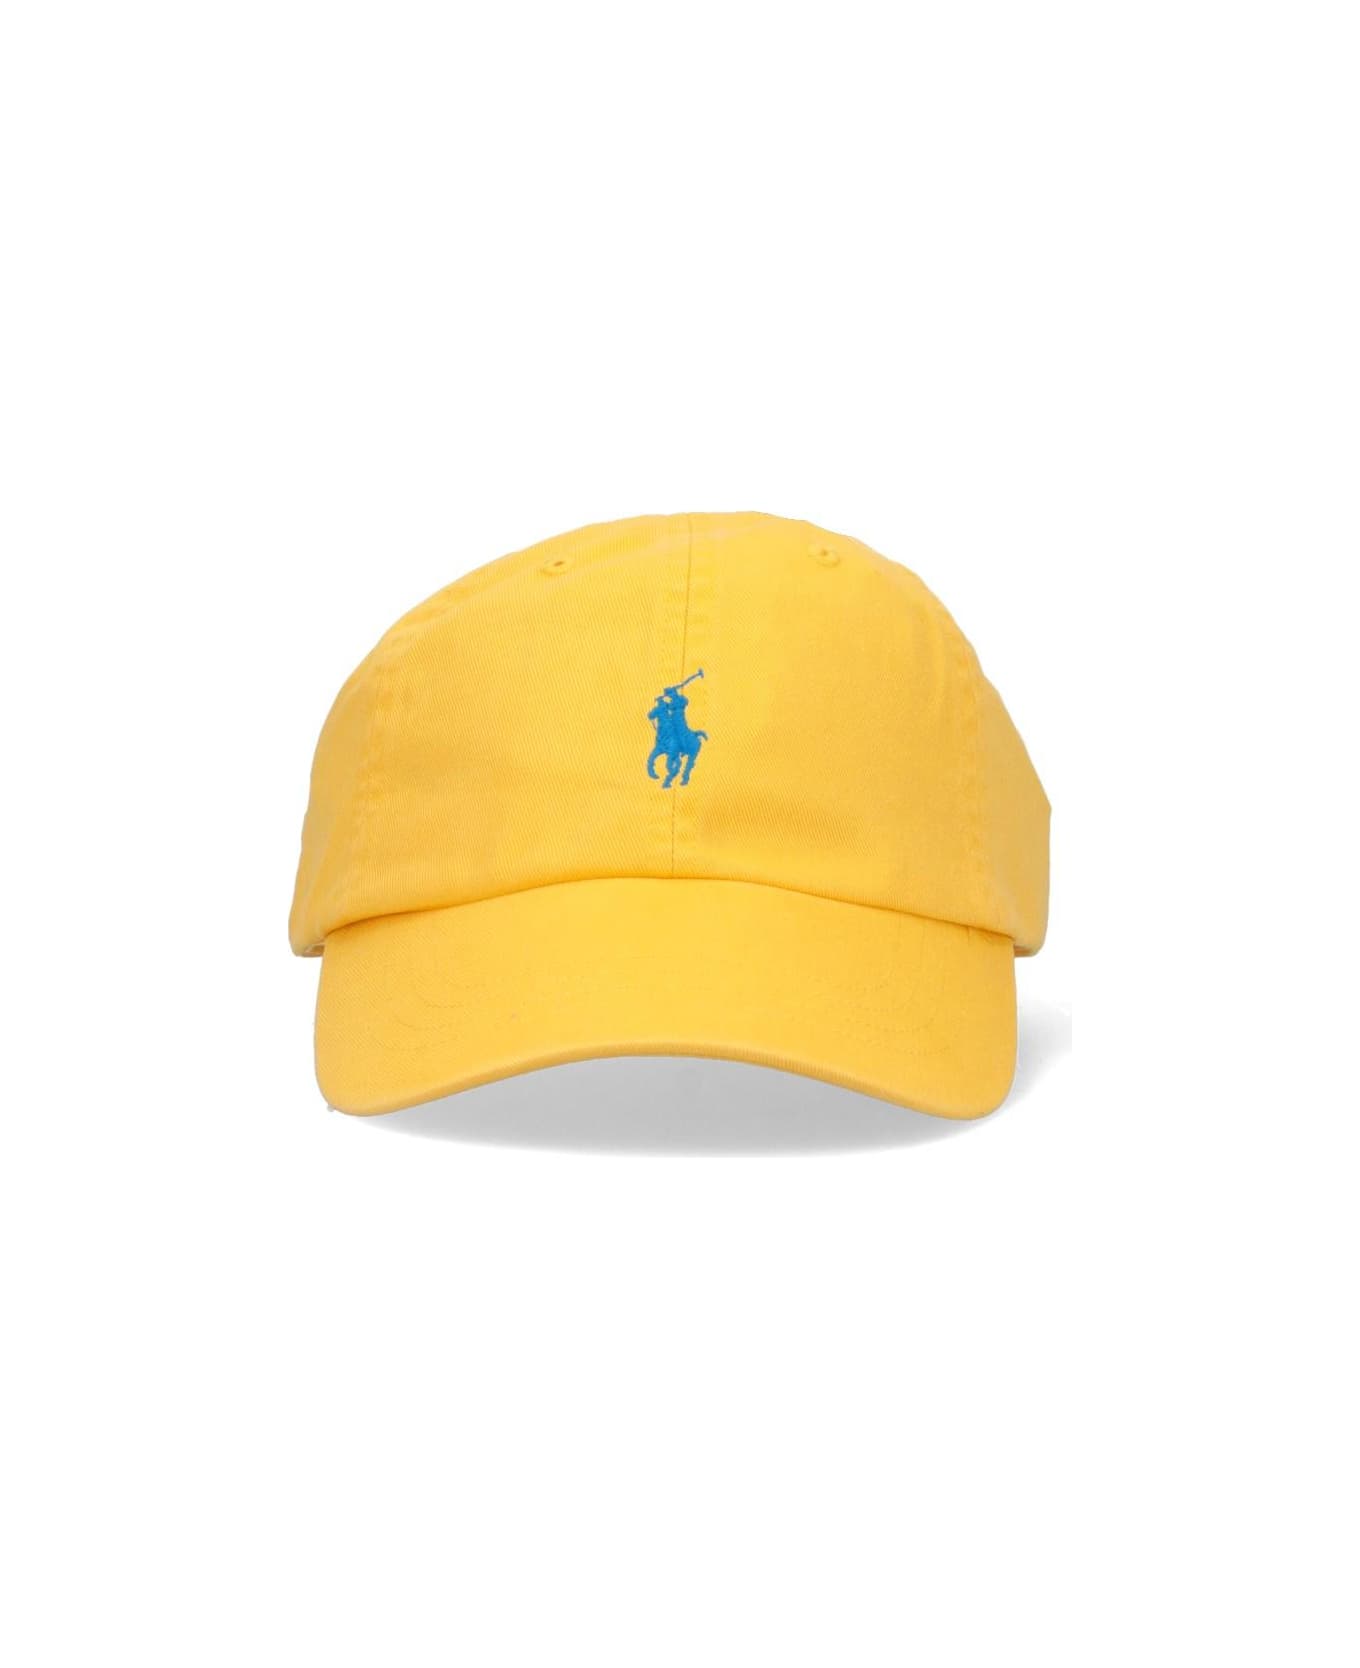 Ralph Lauren Yellow Baseball Hat With Contrasting Pony - Yellow